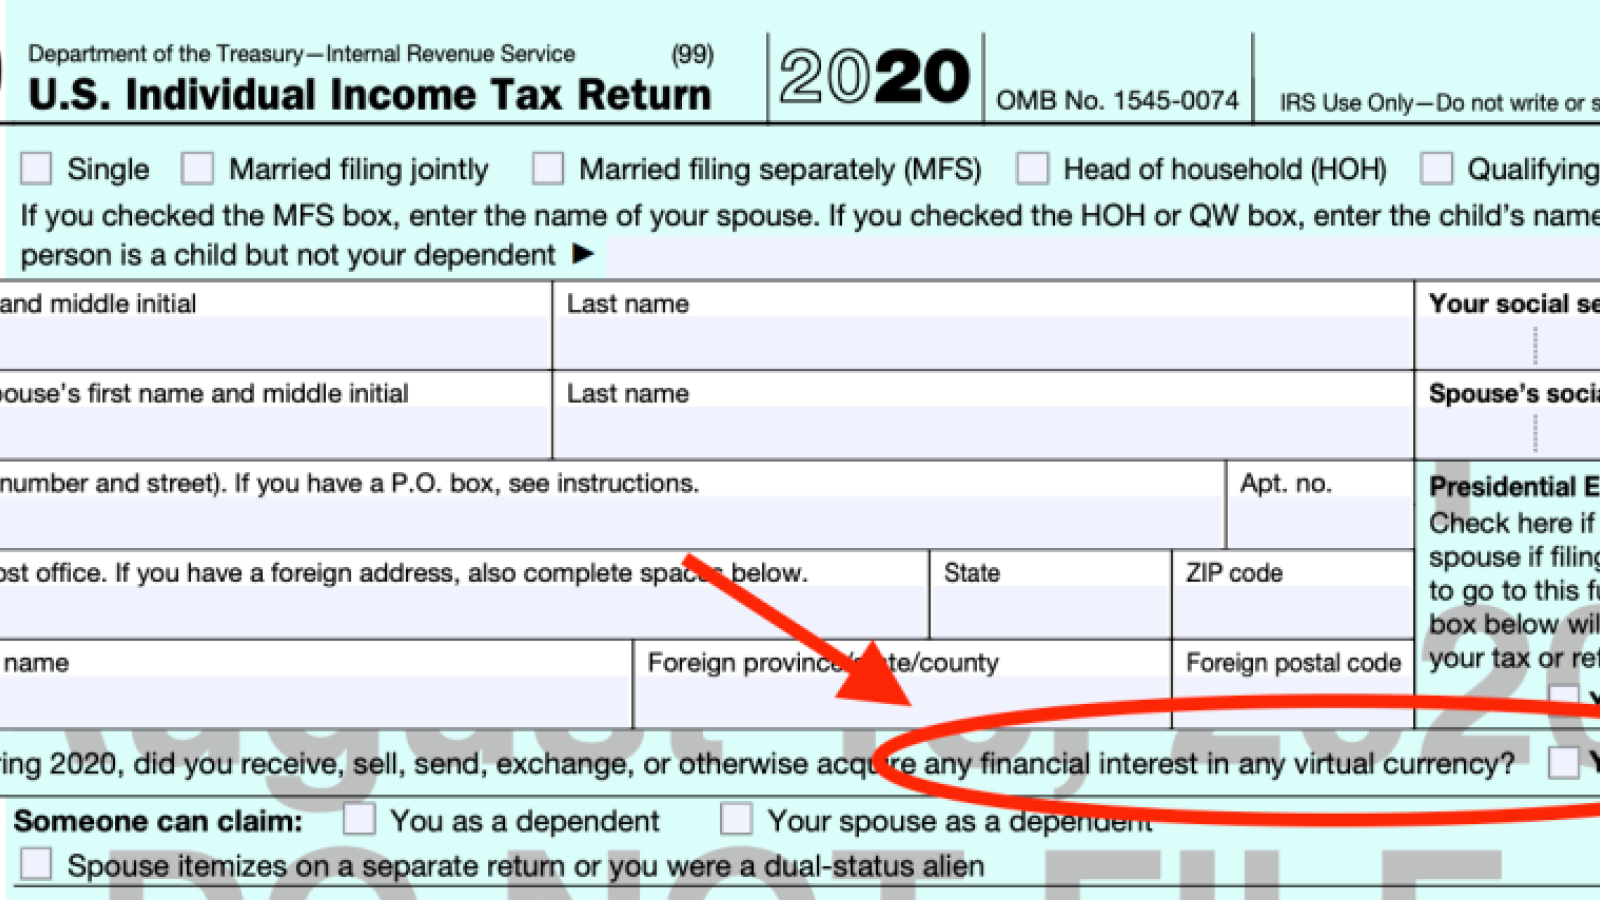 IRS form